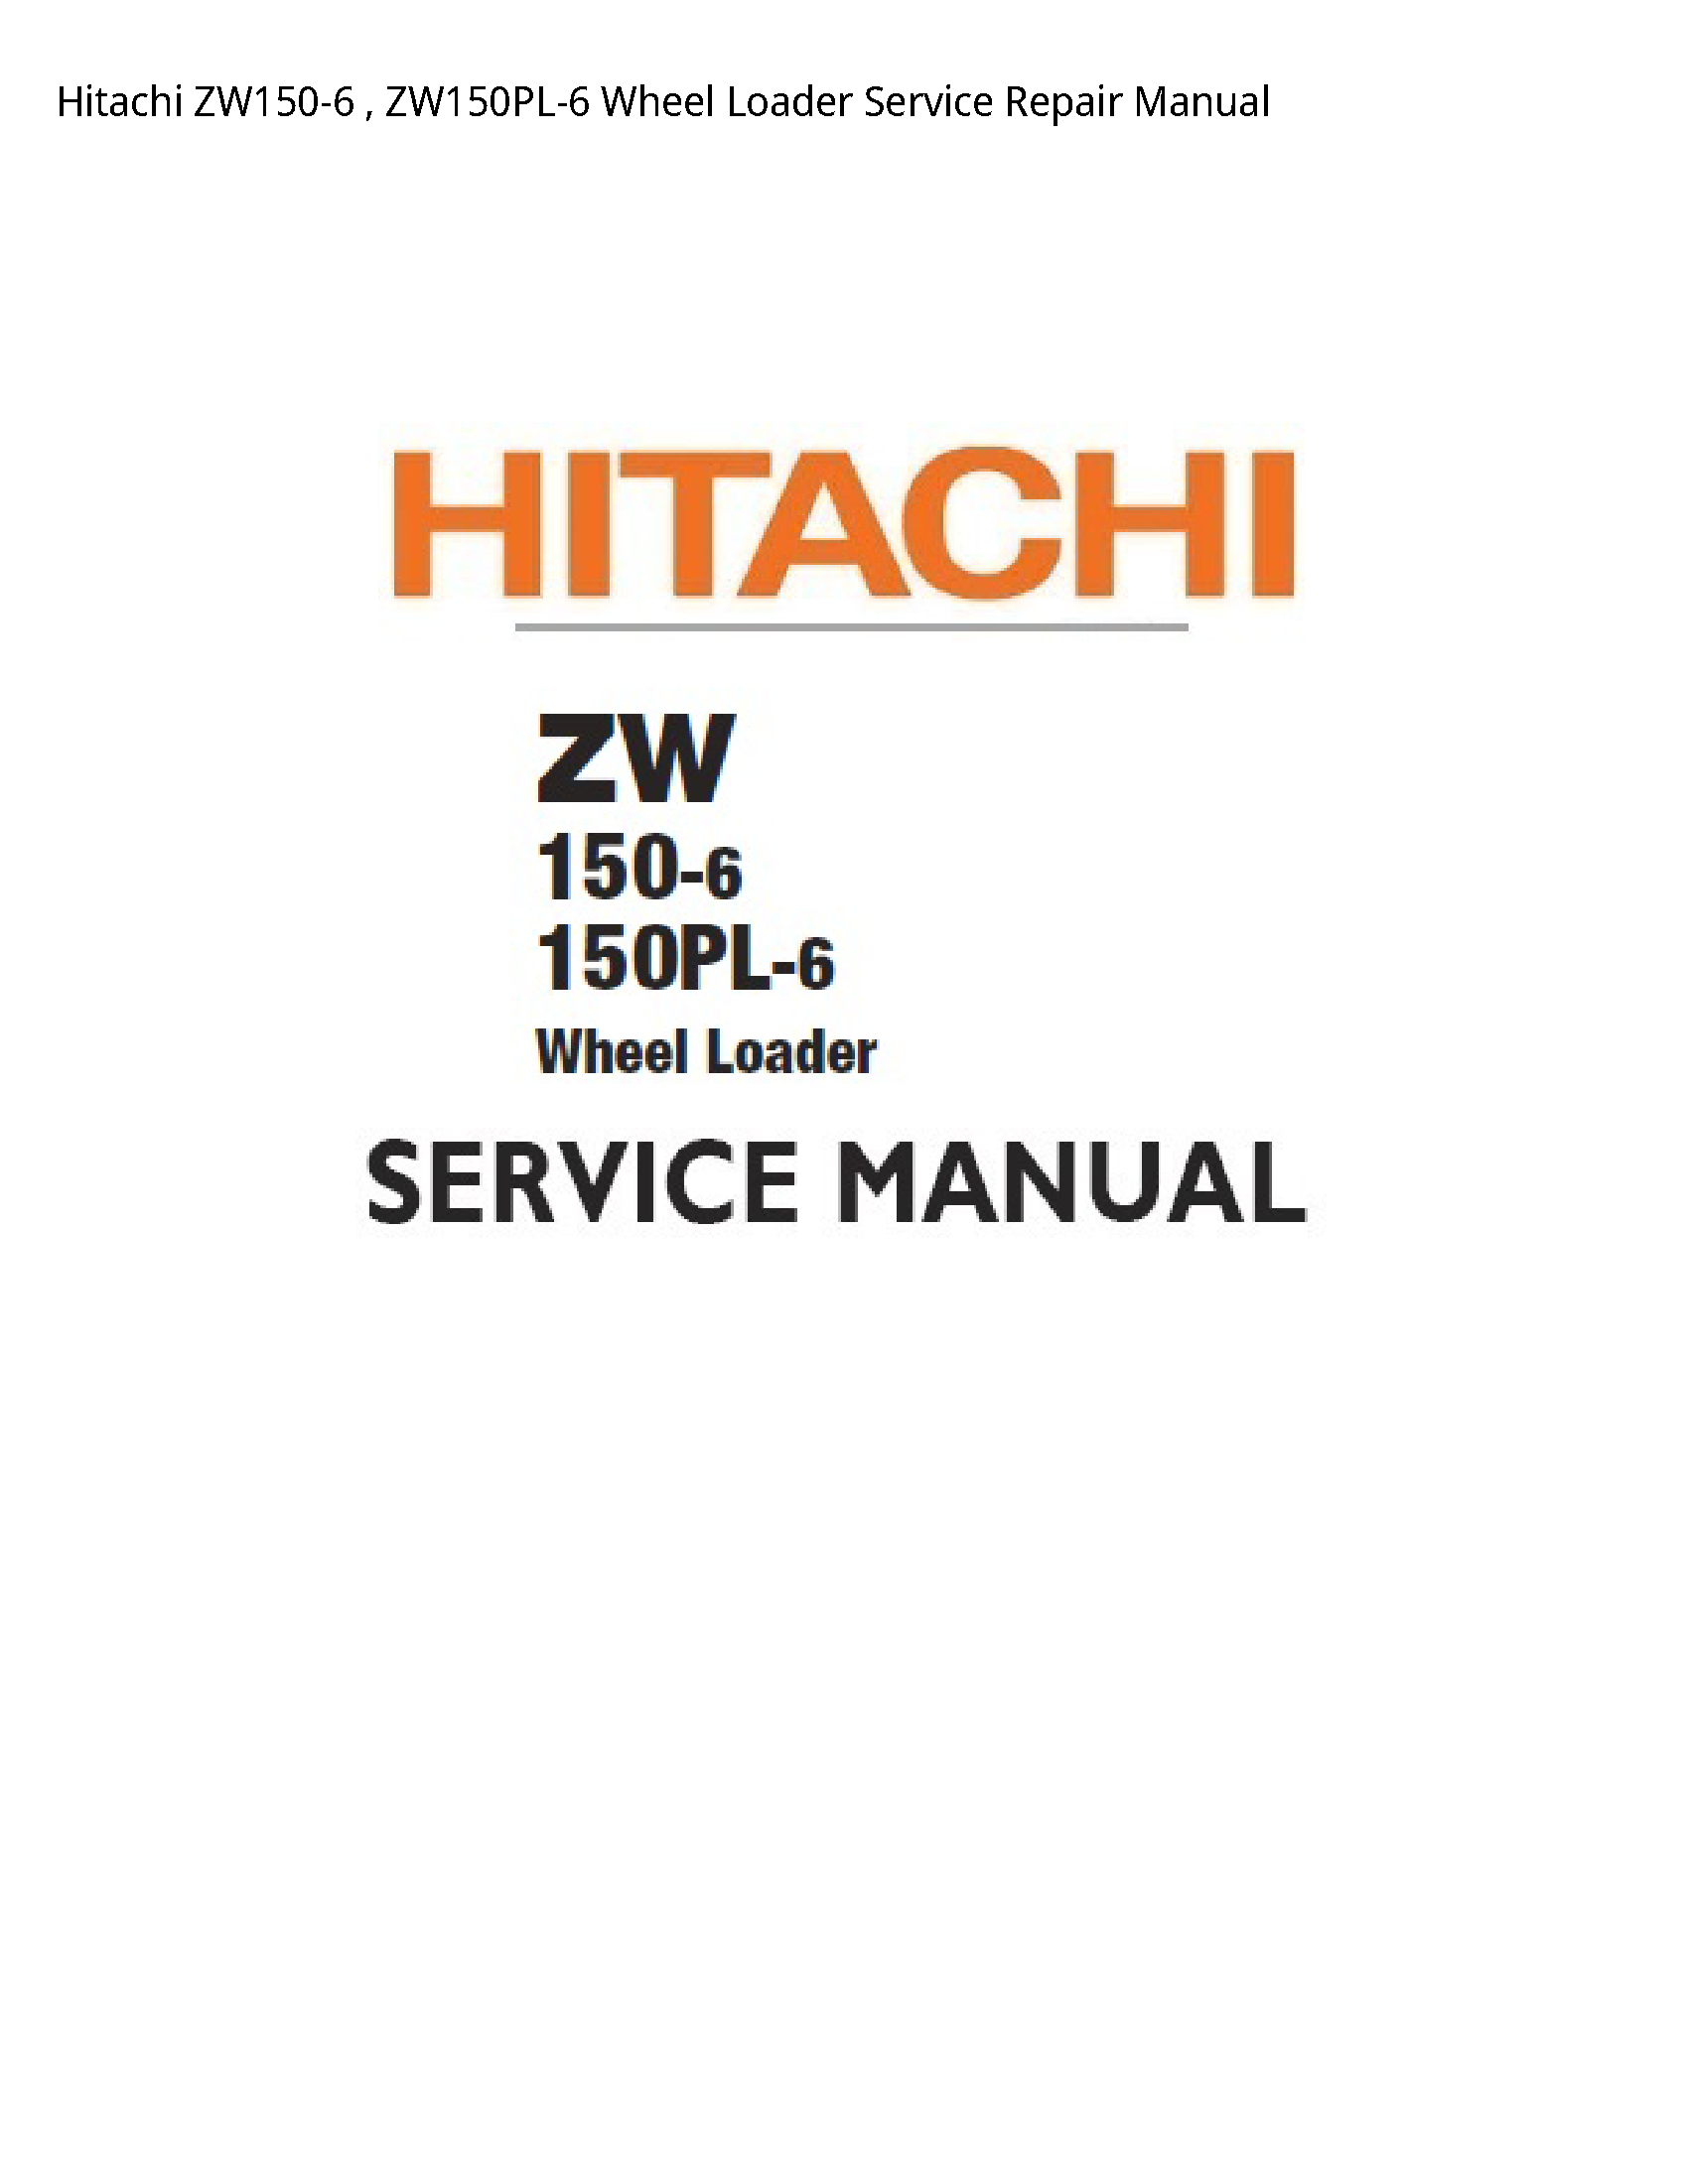 Hitachi ZW150-6 Wheel Loader manual